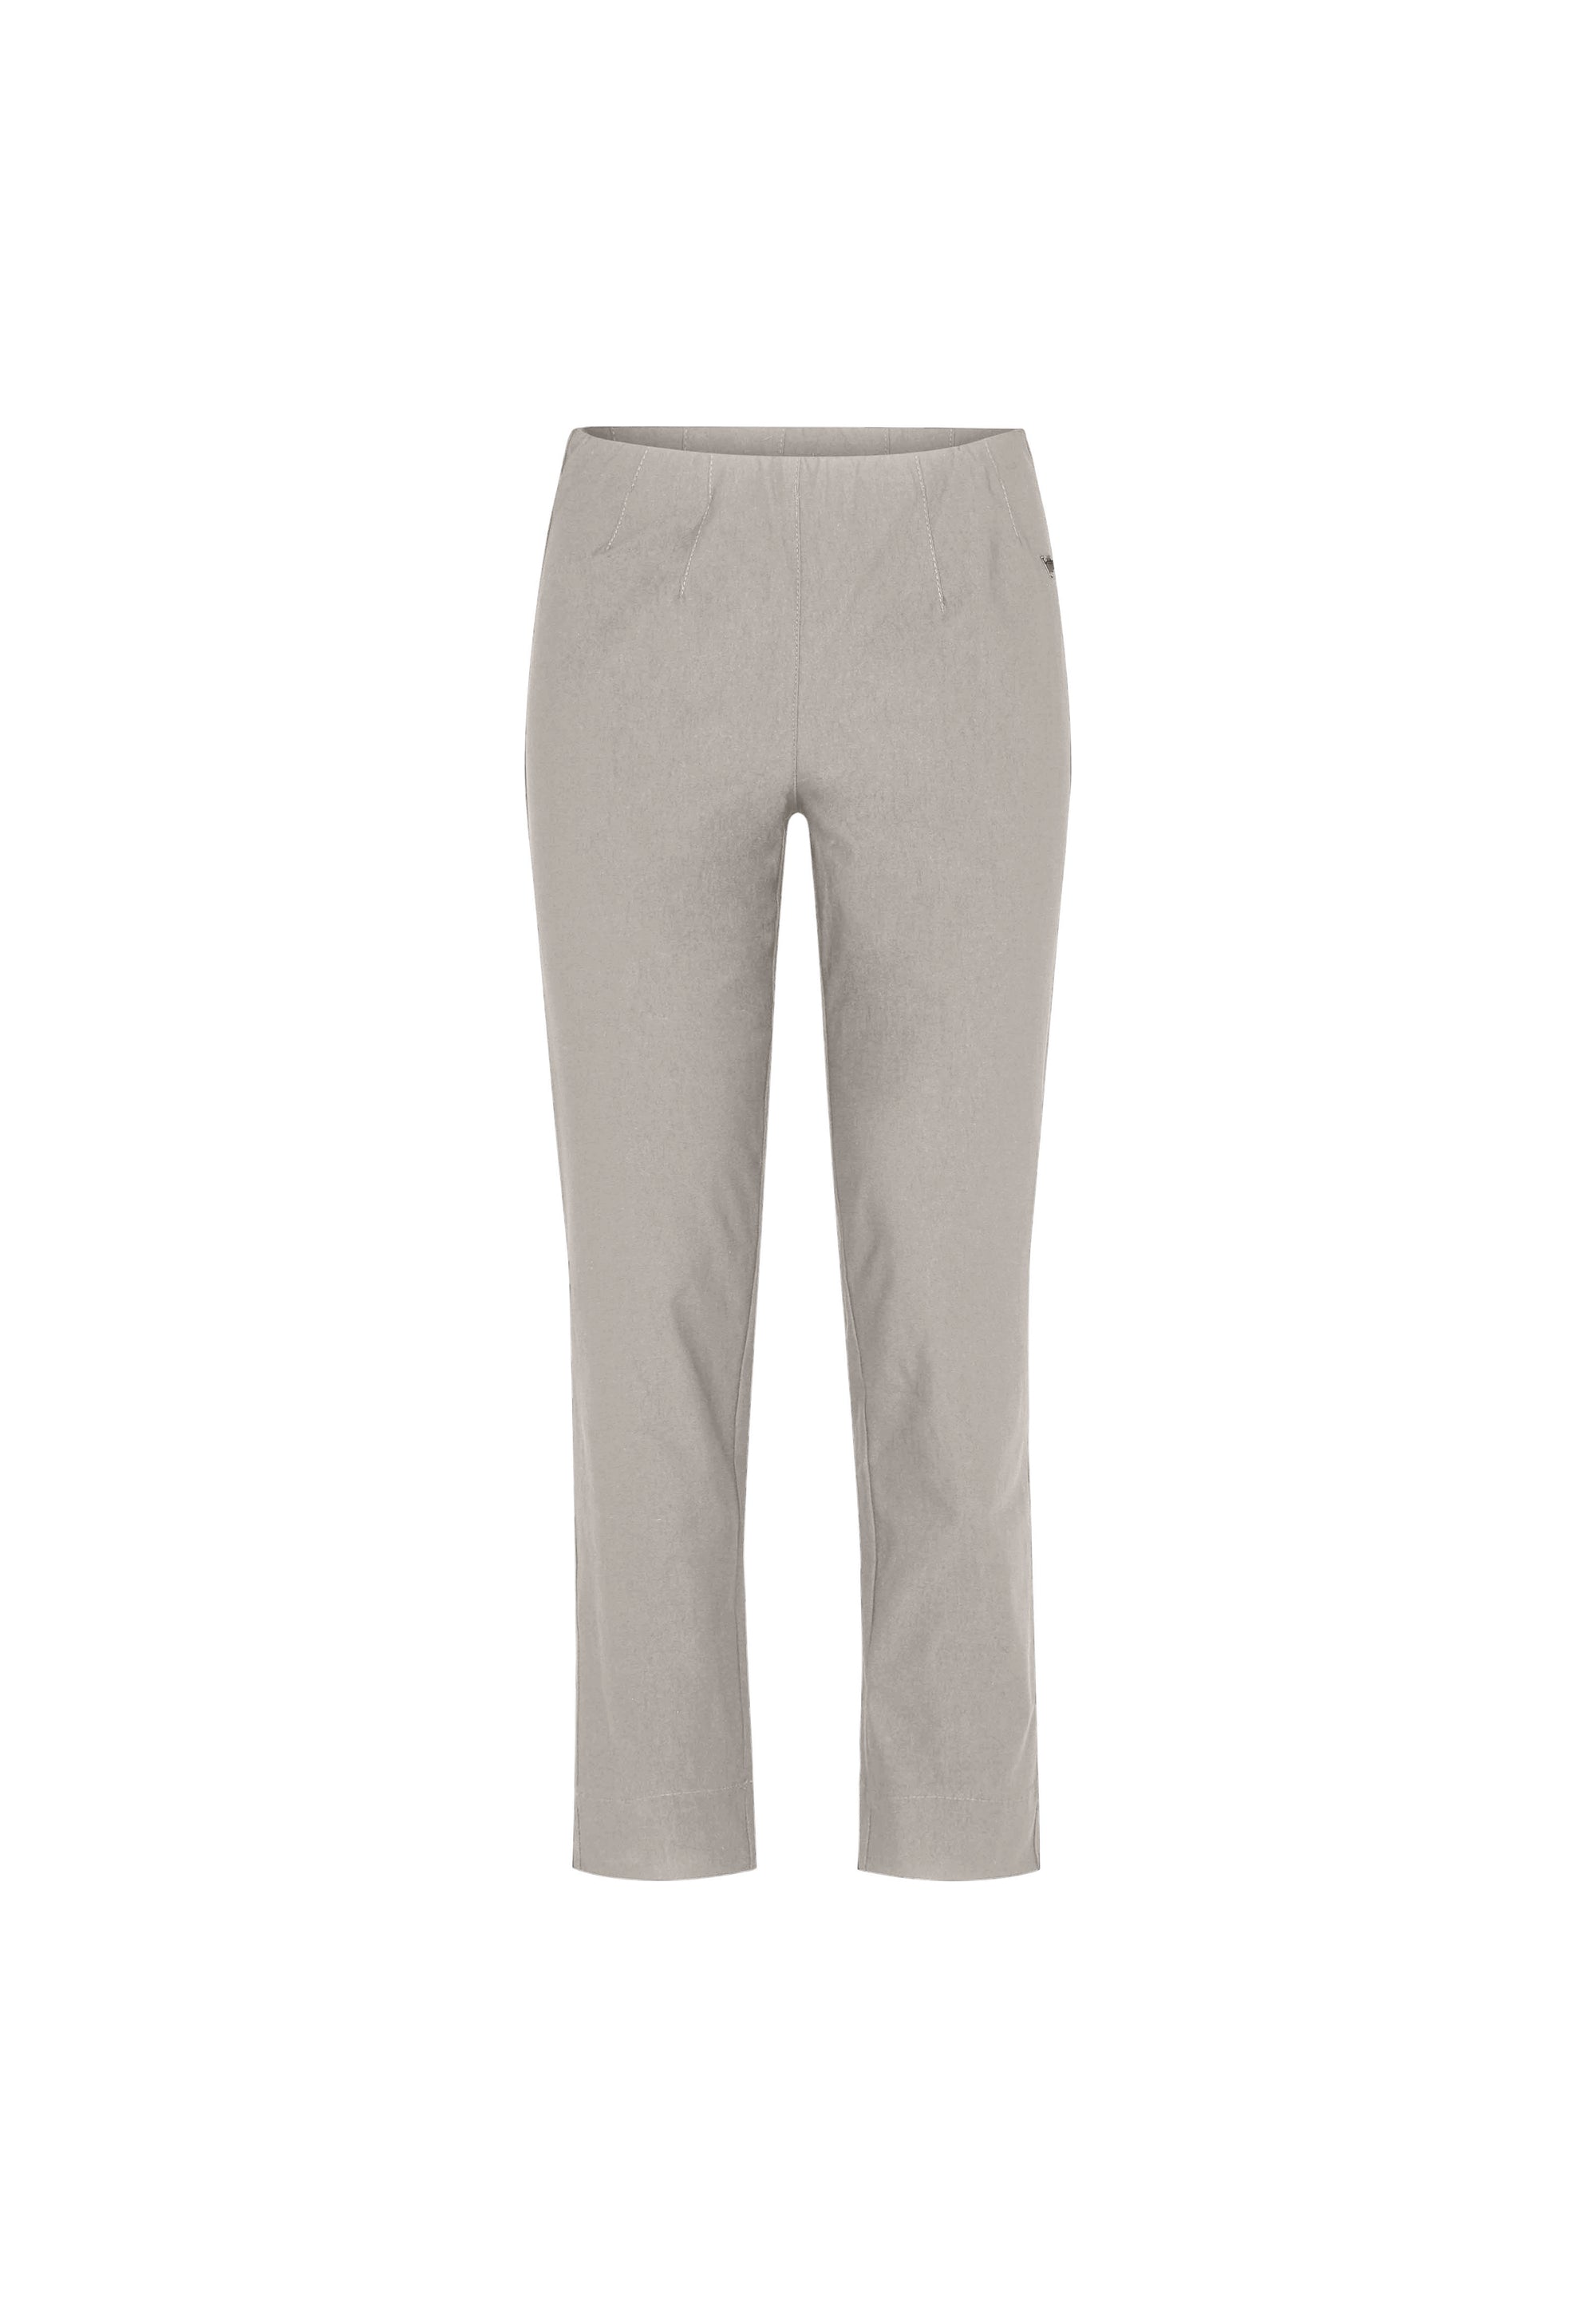 LAURIE Betty Regular - Medium Length Trousers REGULAR 25137 Grey Sand